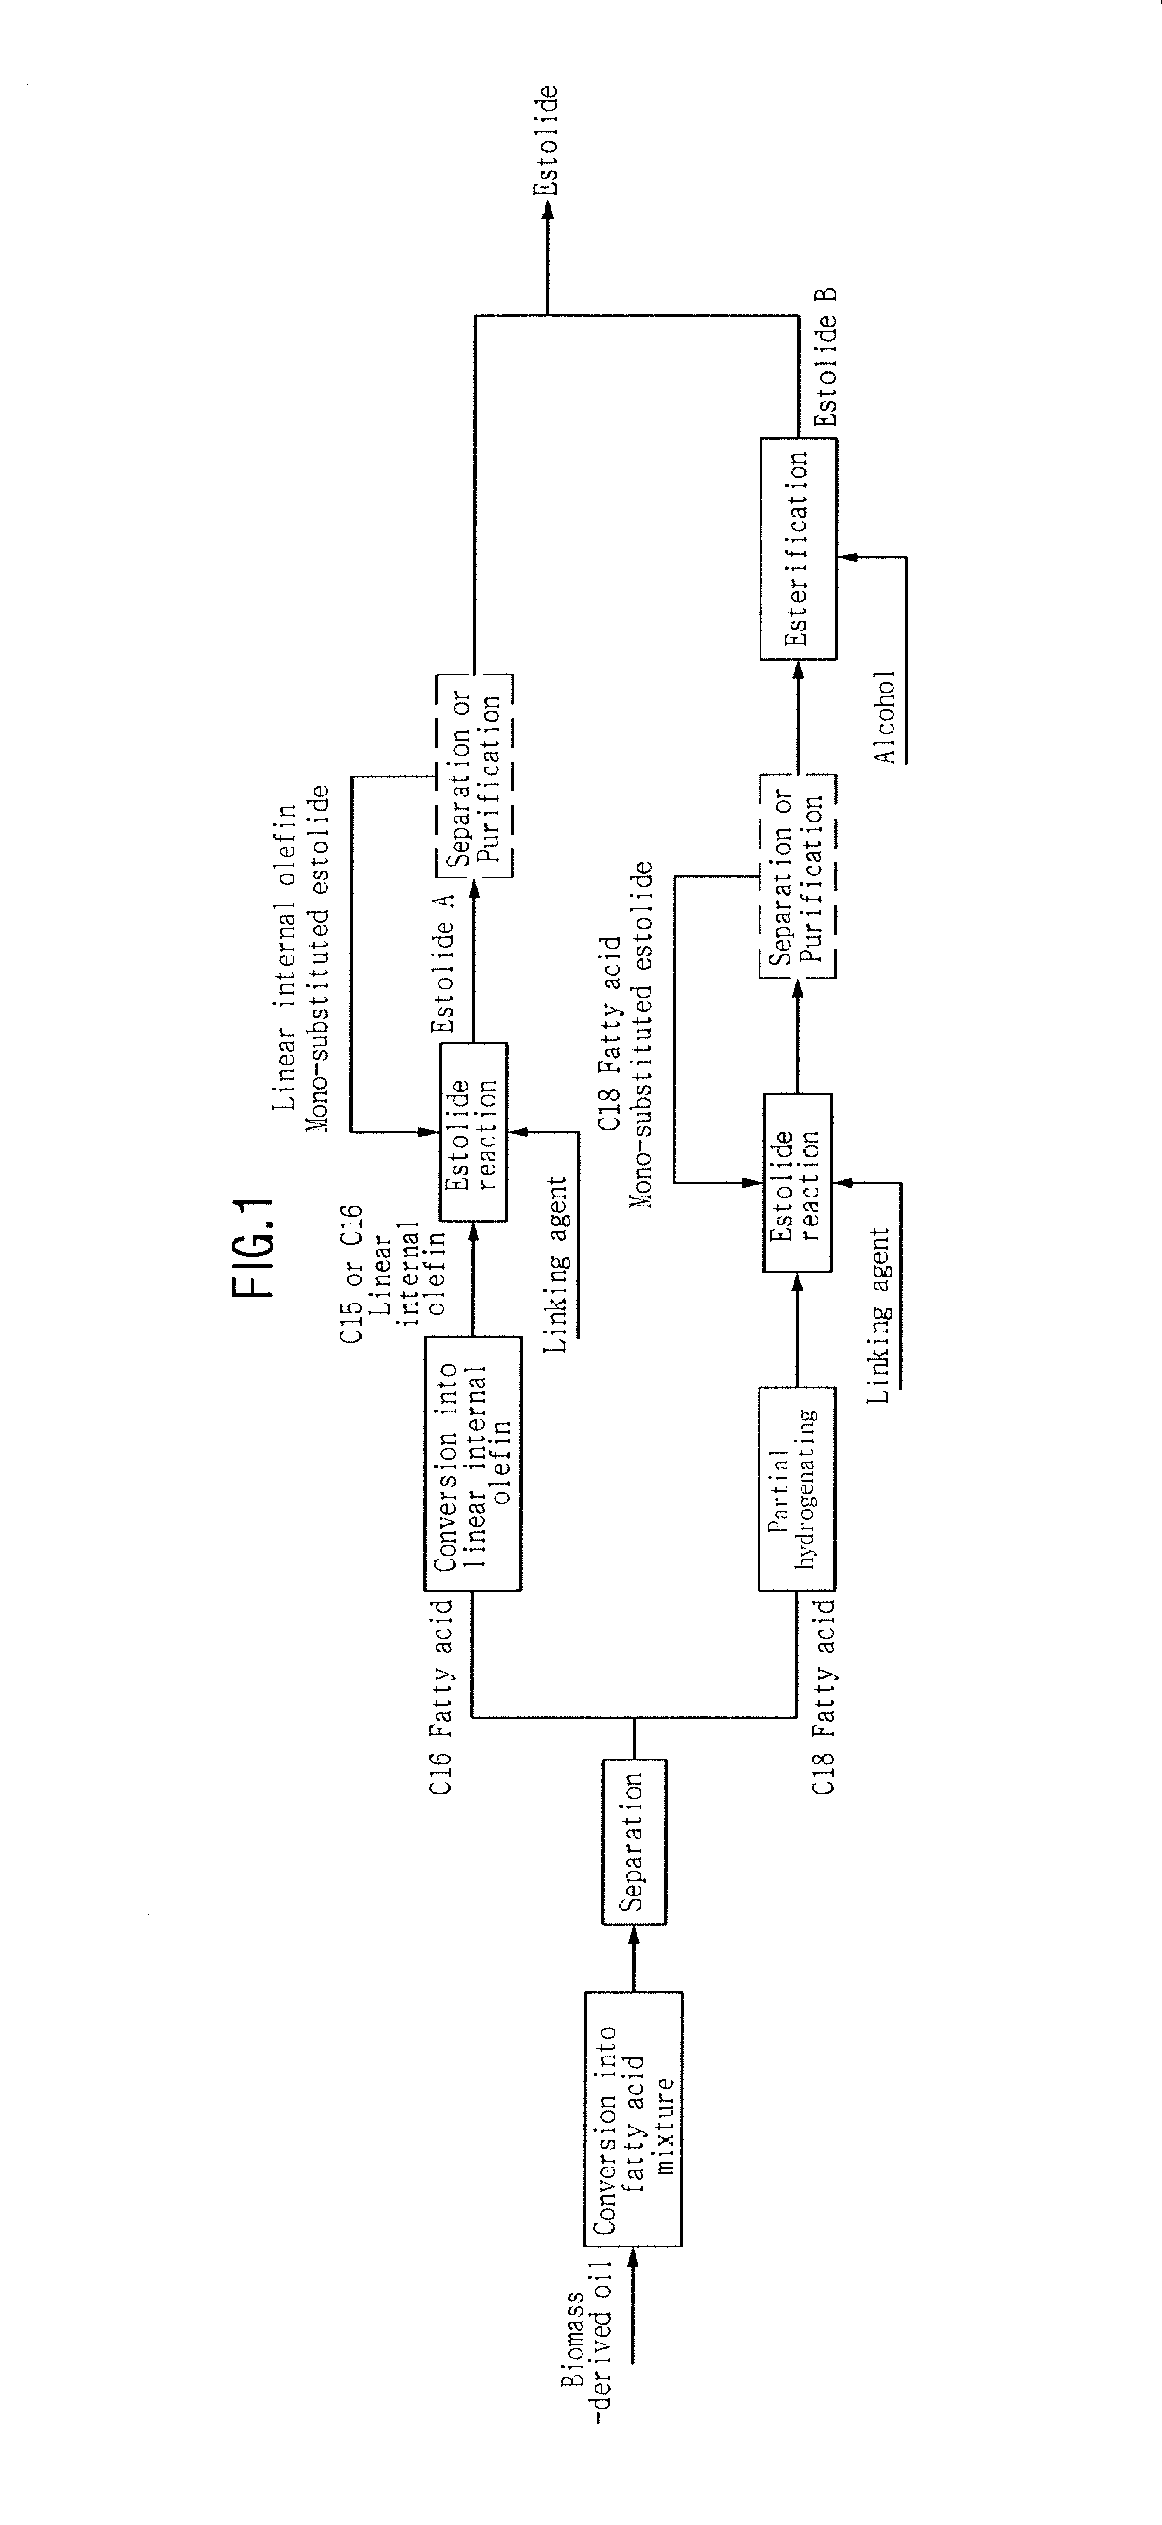 Method of producing estolide using linking agent